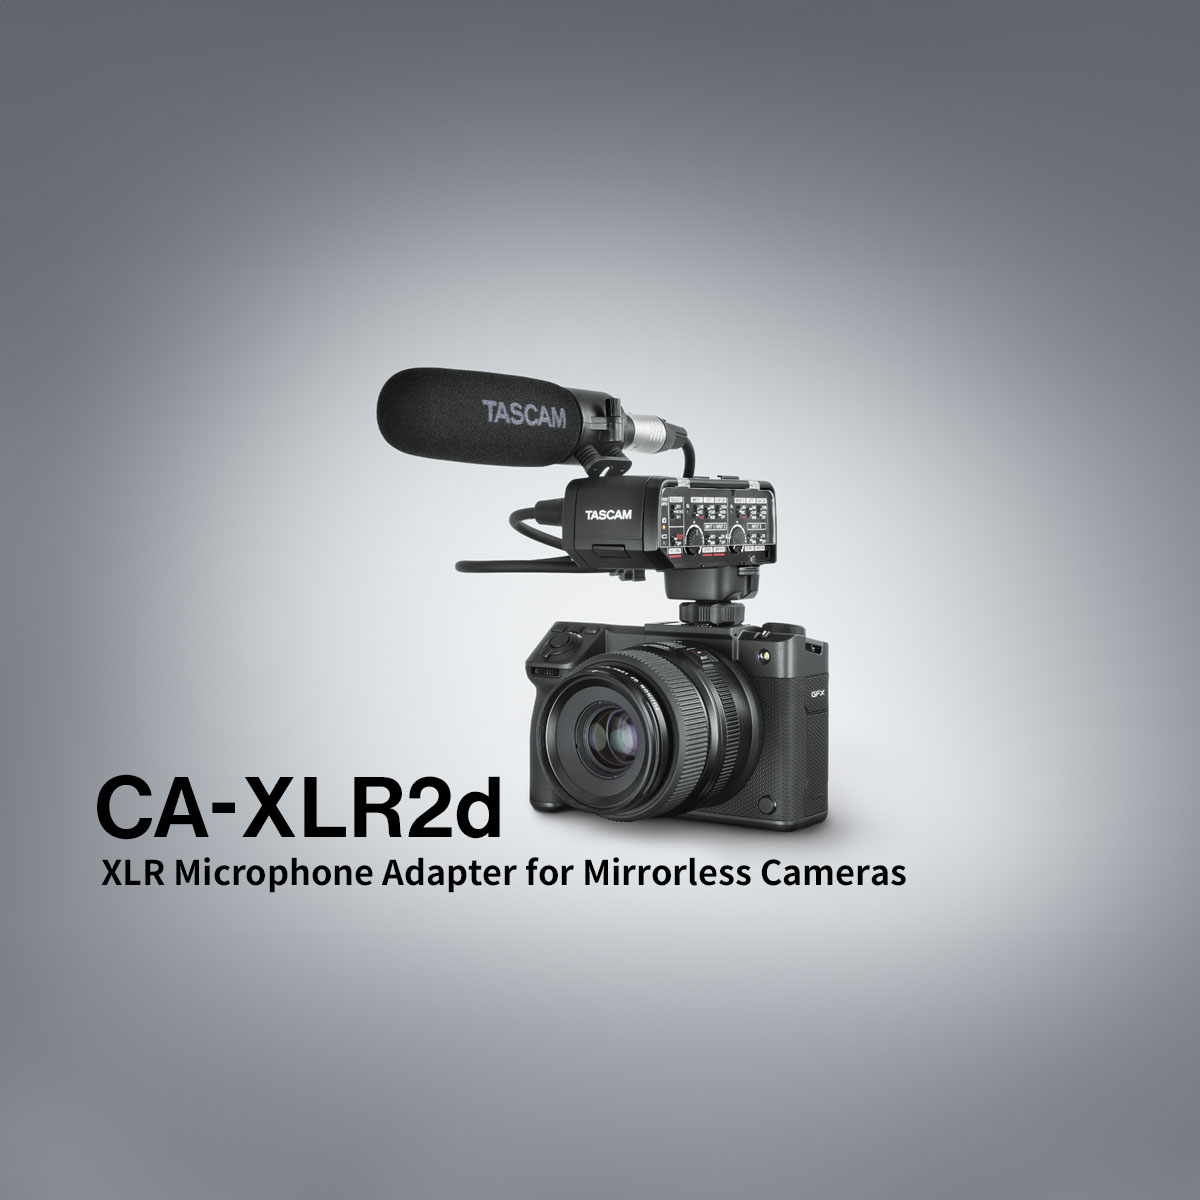 [Actualizado] CA-XLR2d - Actualización con la lista de cámaras verificadas.